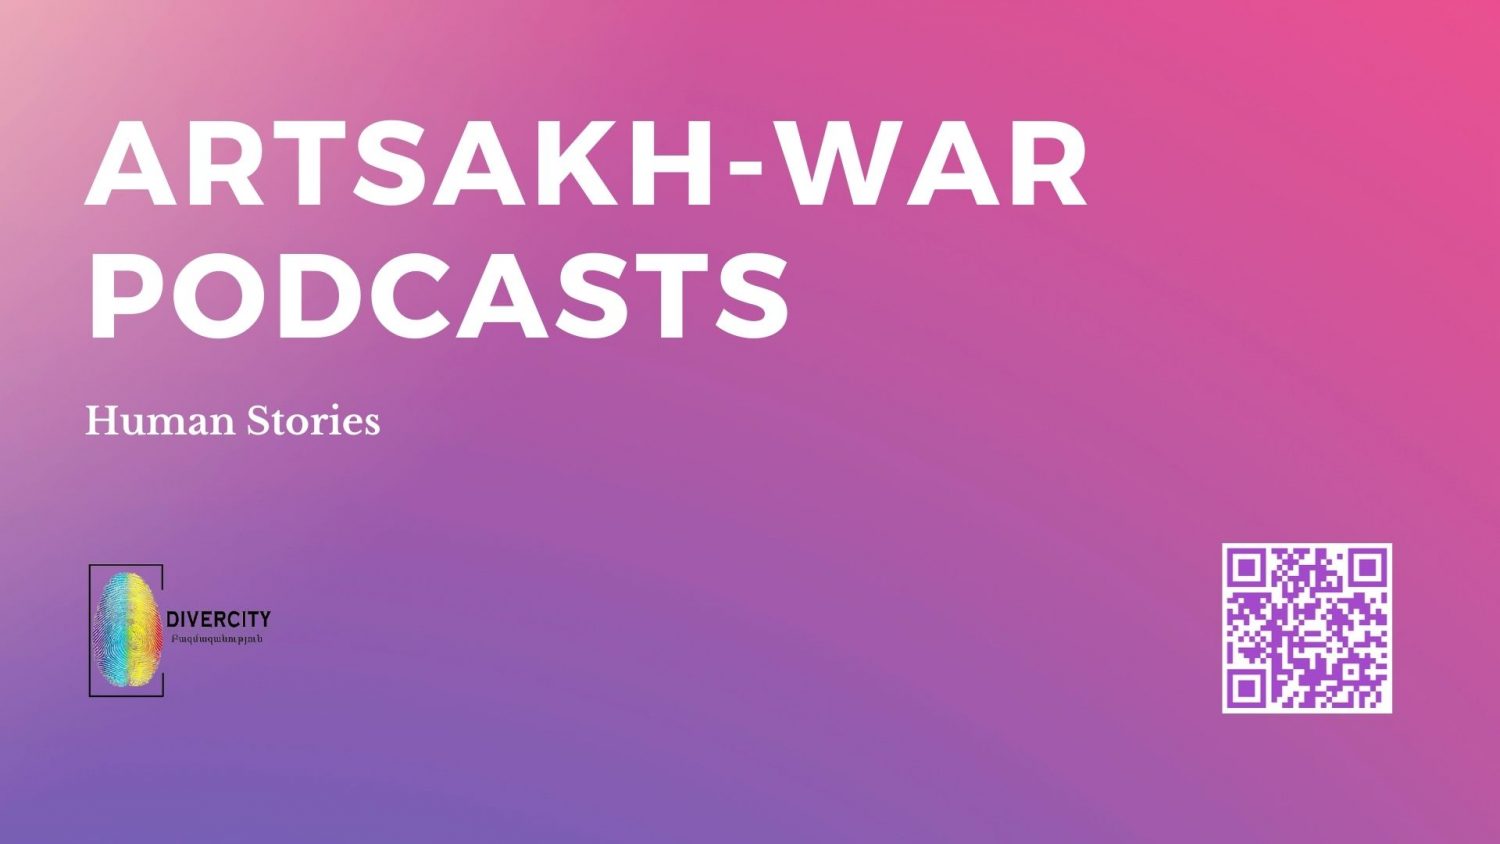 Artsakh-War Podcasts 2020 | Human Stories